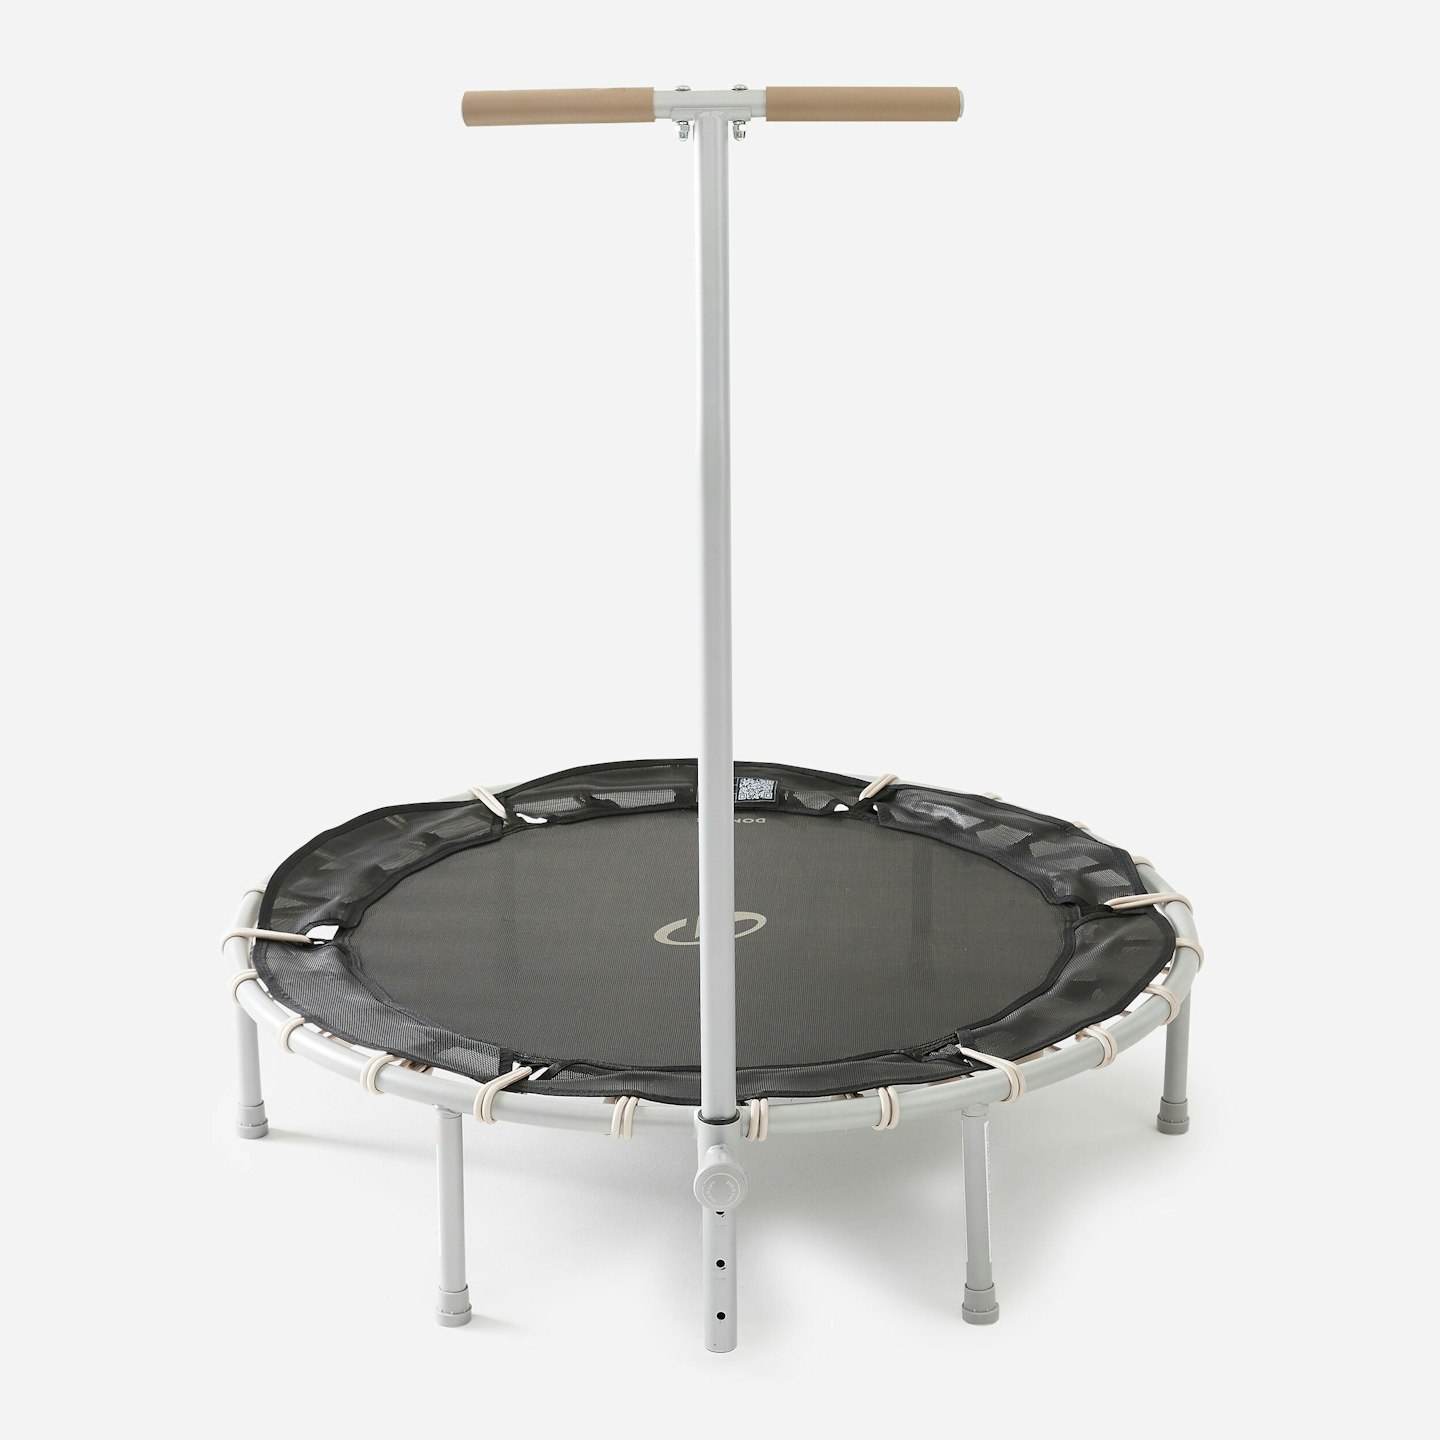 DOMYOS Fitness trampoline